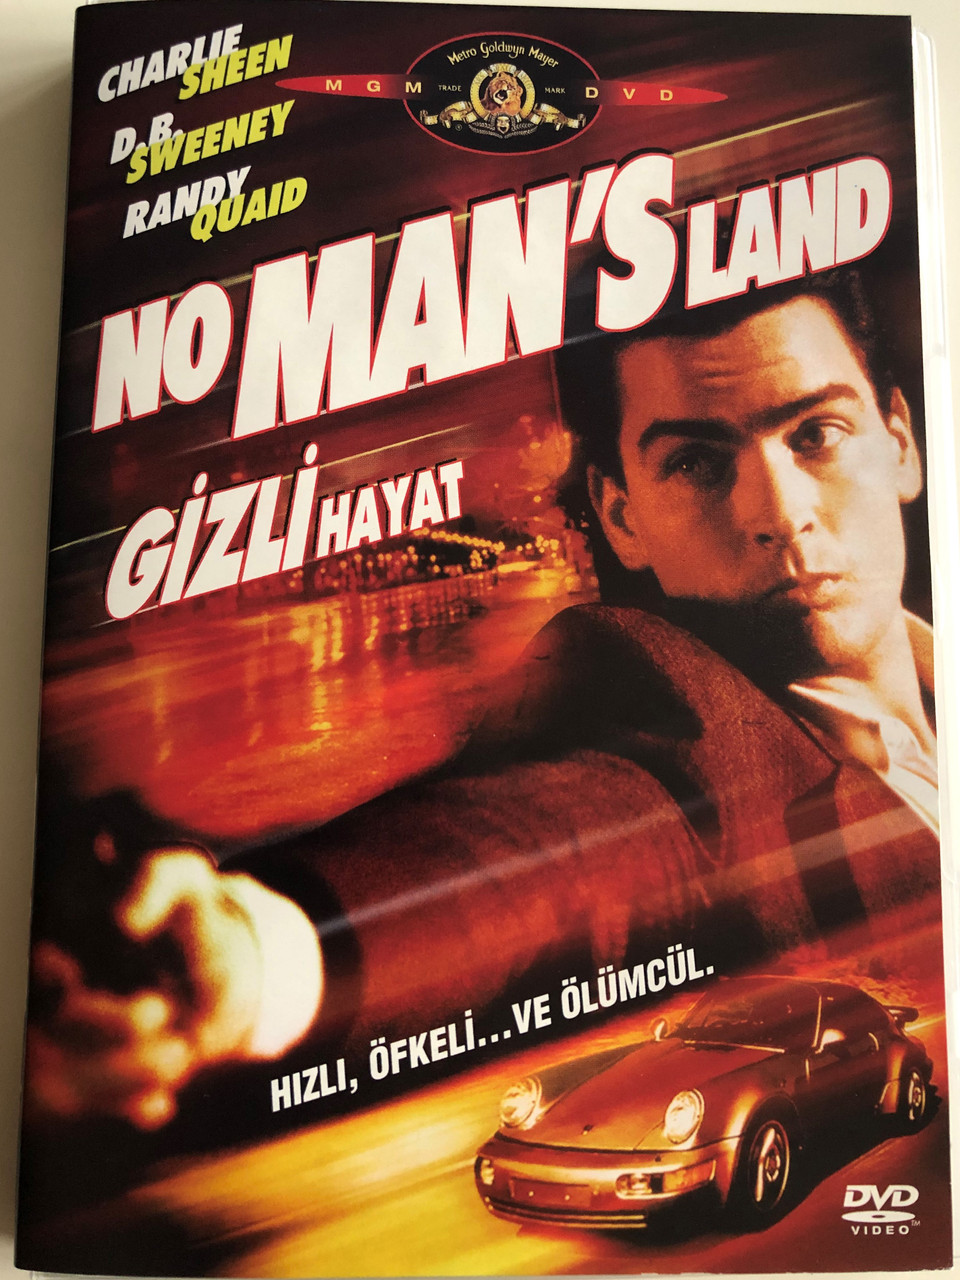 No man's Land DVD 1987 Gizli Hayat / Directed by Peter Werner / Starring:  Charlie Sheen, D. B. Sweeney, Randy Quaid - bibleinmylanguage